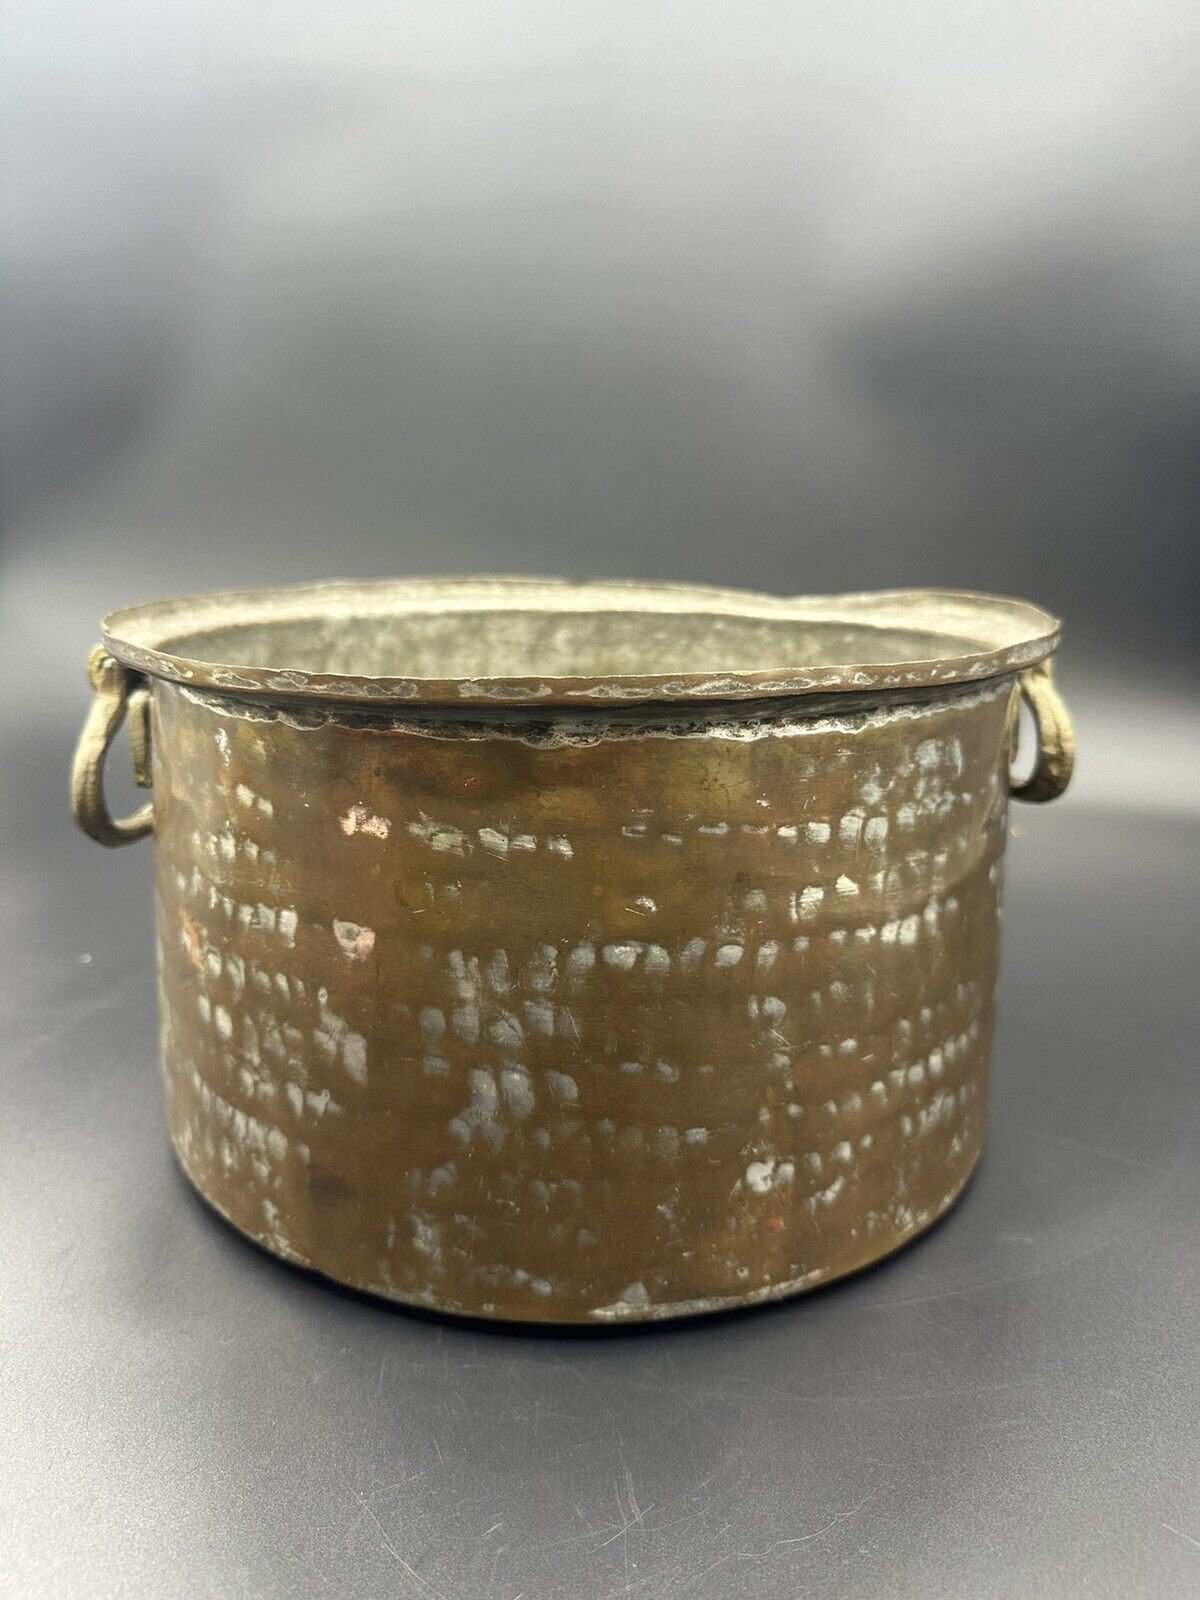 Vintage Antique Hammered Copper Cooking Pot/Cauldron with Brass Handles Handmade